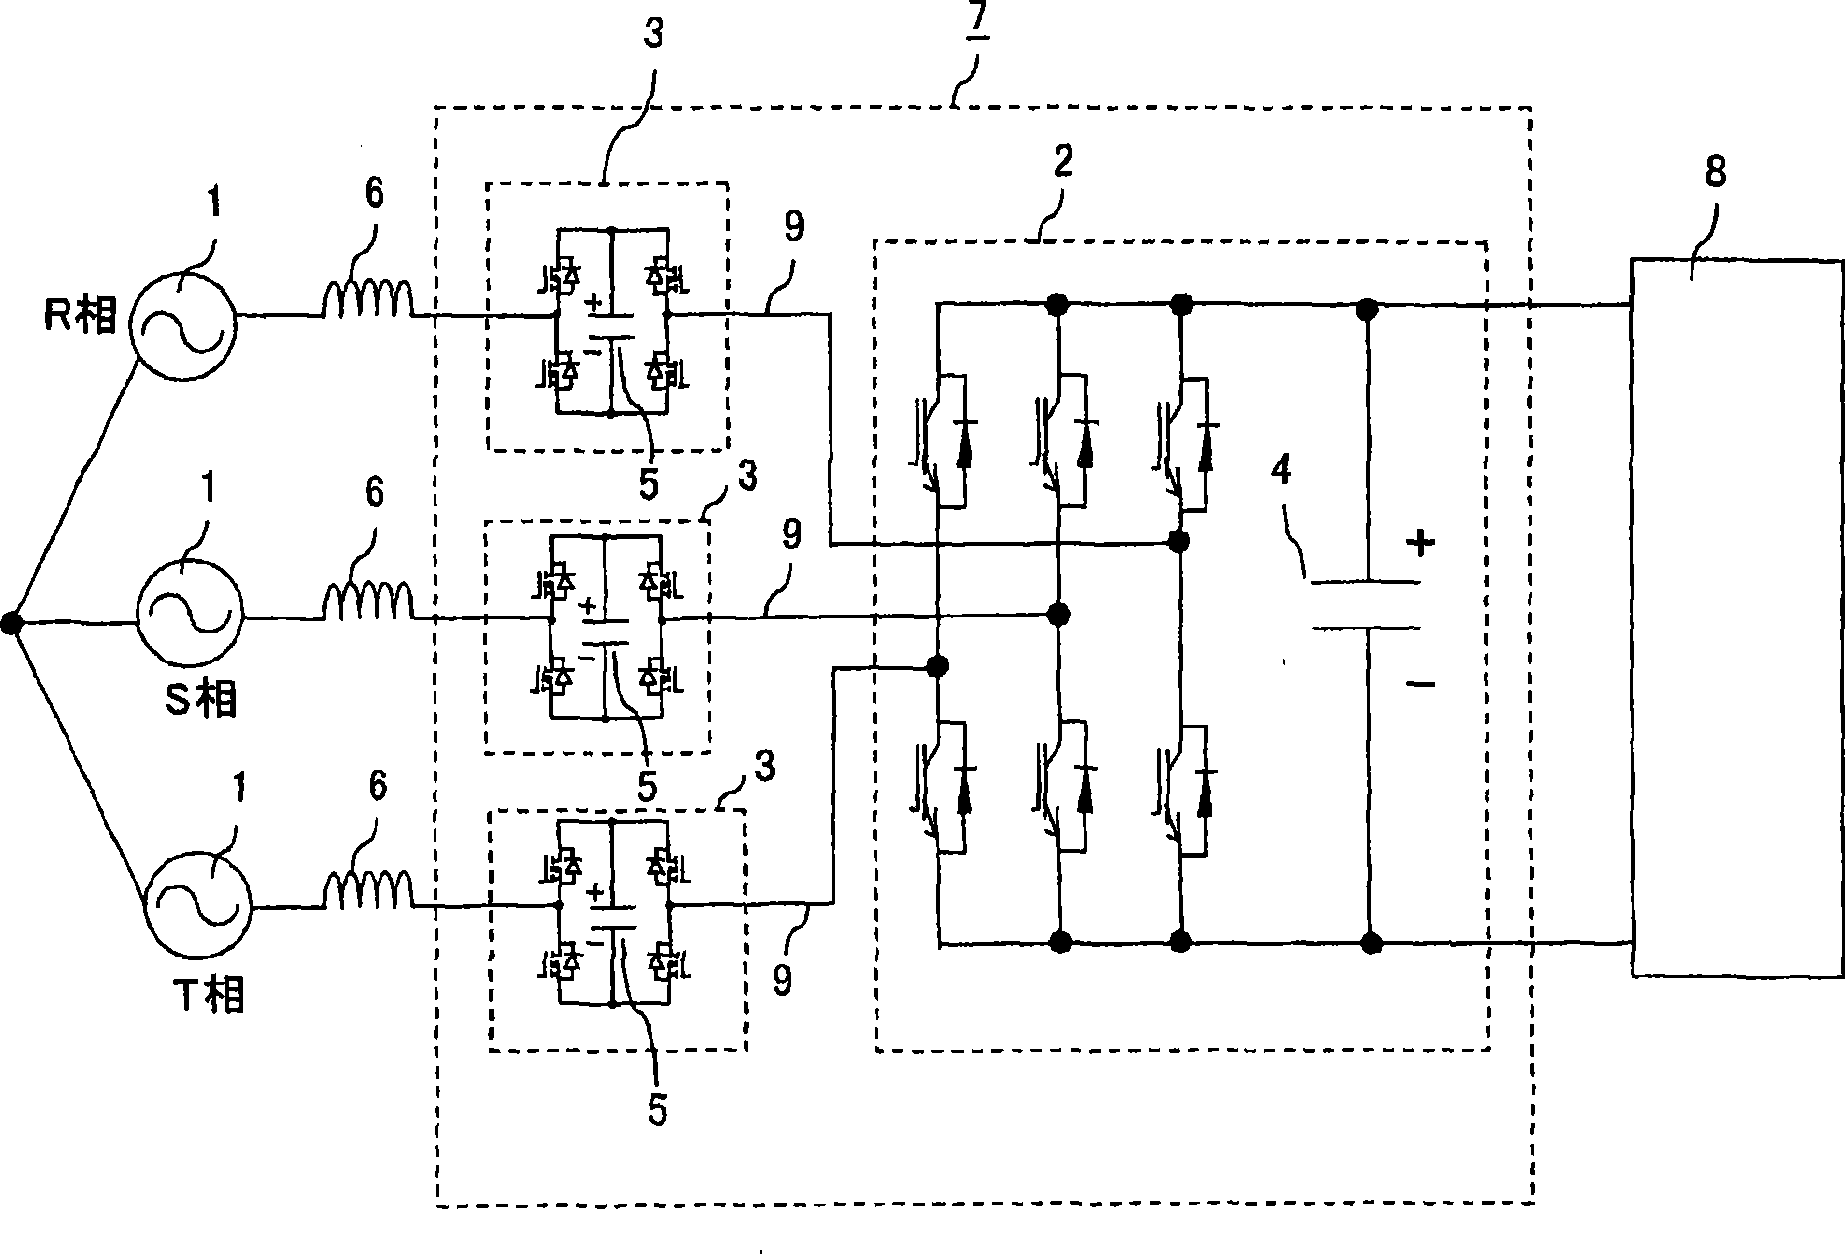 Power converting apparatus